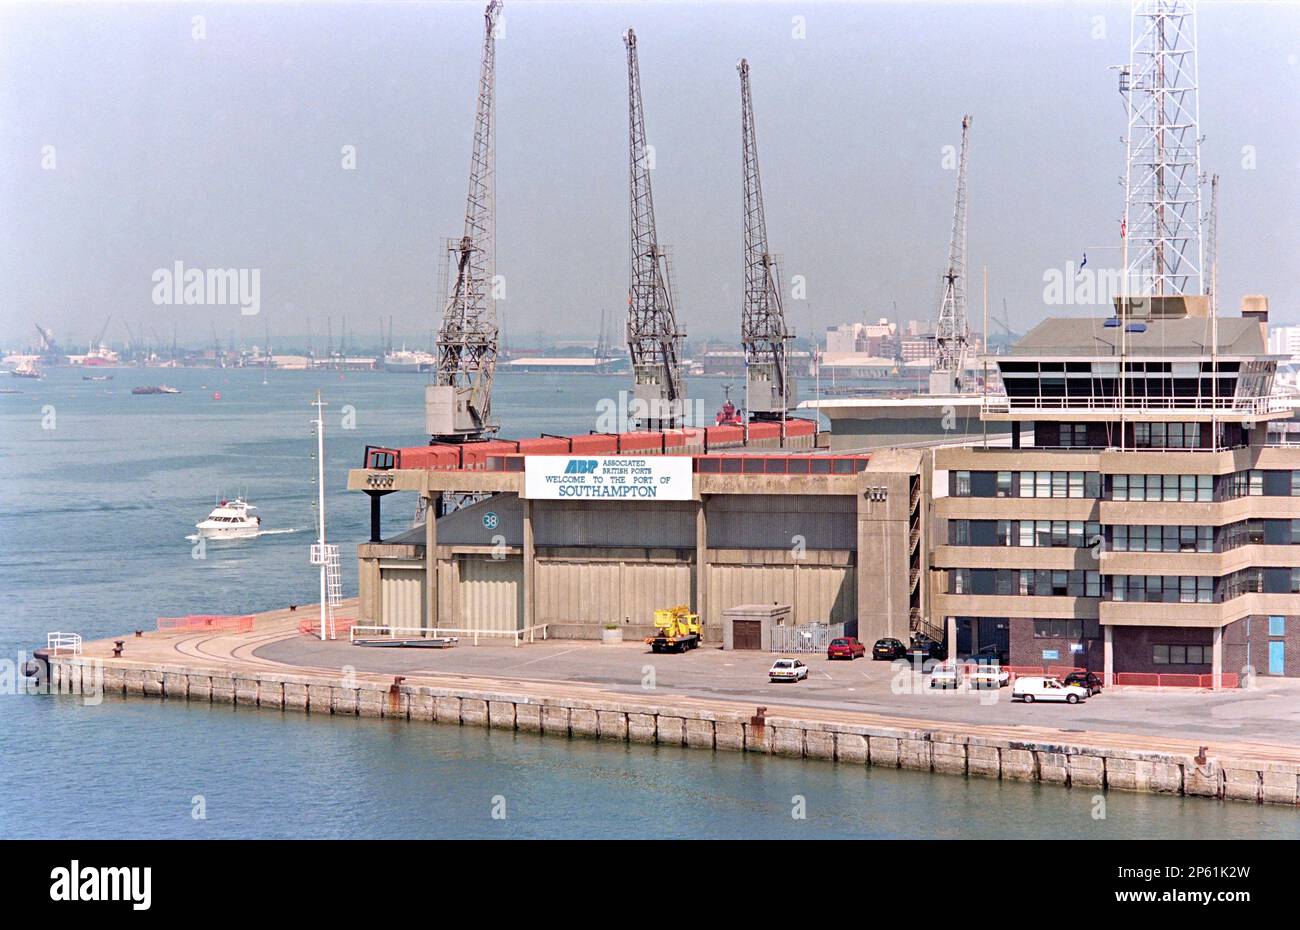 Ingresso al porto di Southampton, Southampton Docks, Southampton, Hampshire, Inghilterra, REGNO UNITO Foto Stock